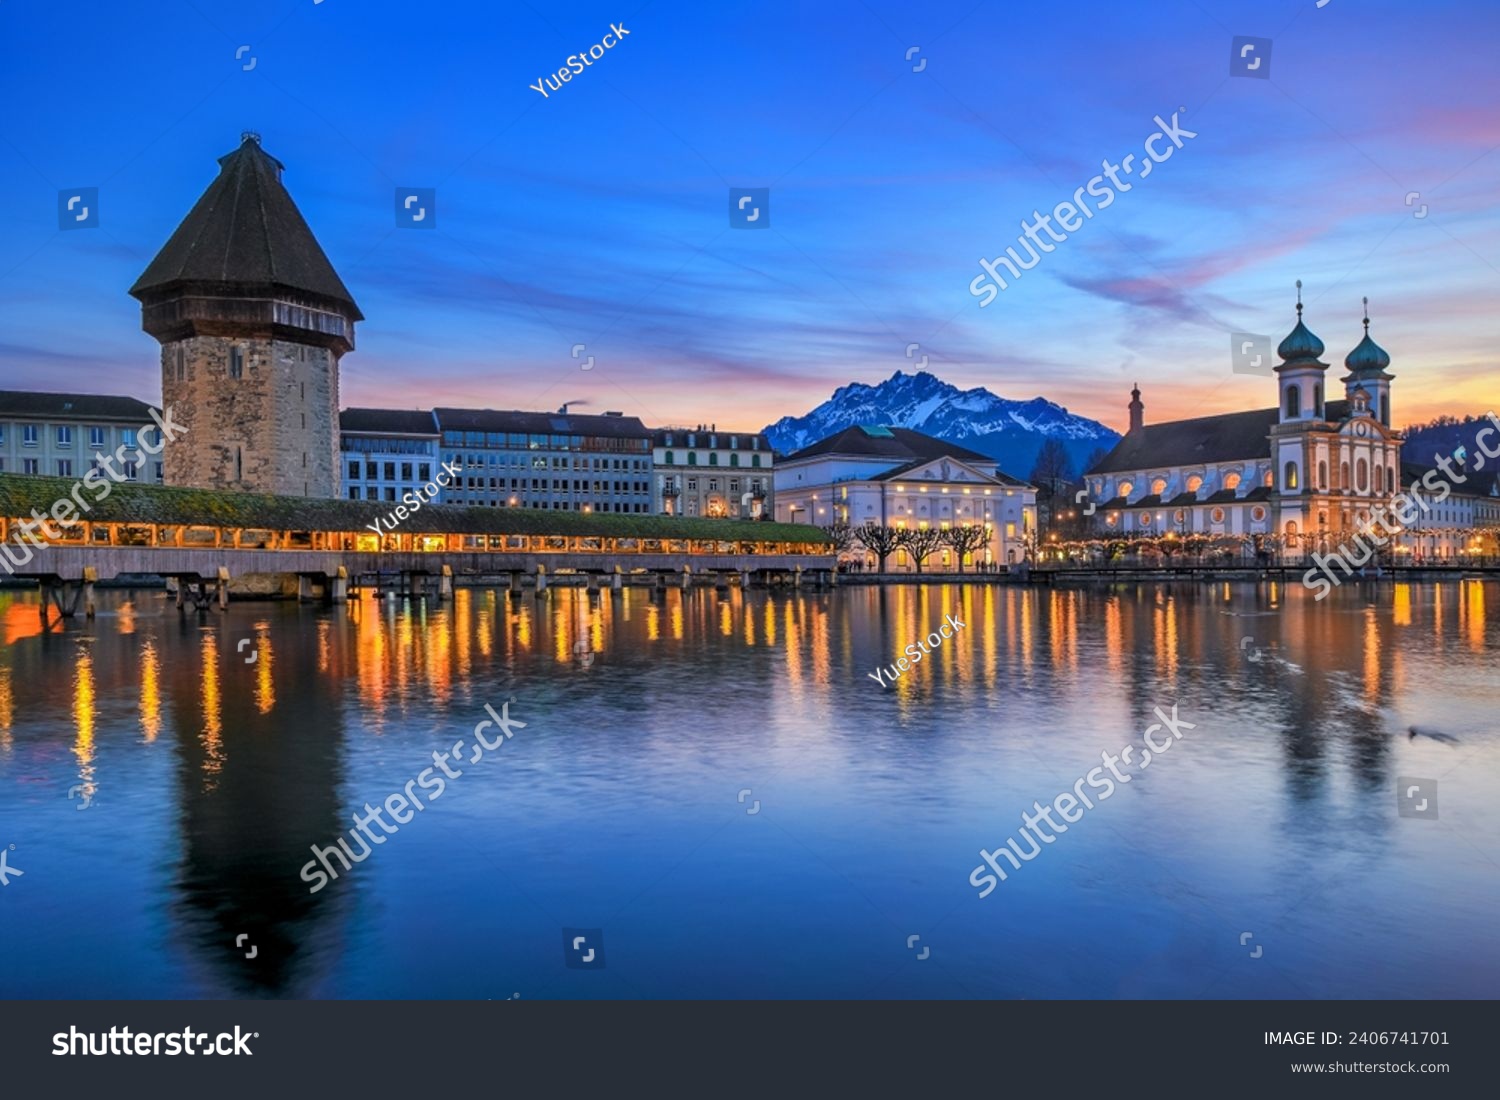 Luzern Kappelbrucke bridge and Jesuten church with Pilatus mountain at background in the evening view, Switzerland #2406741701